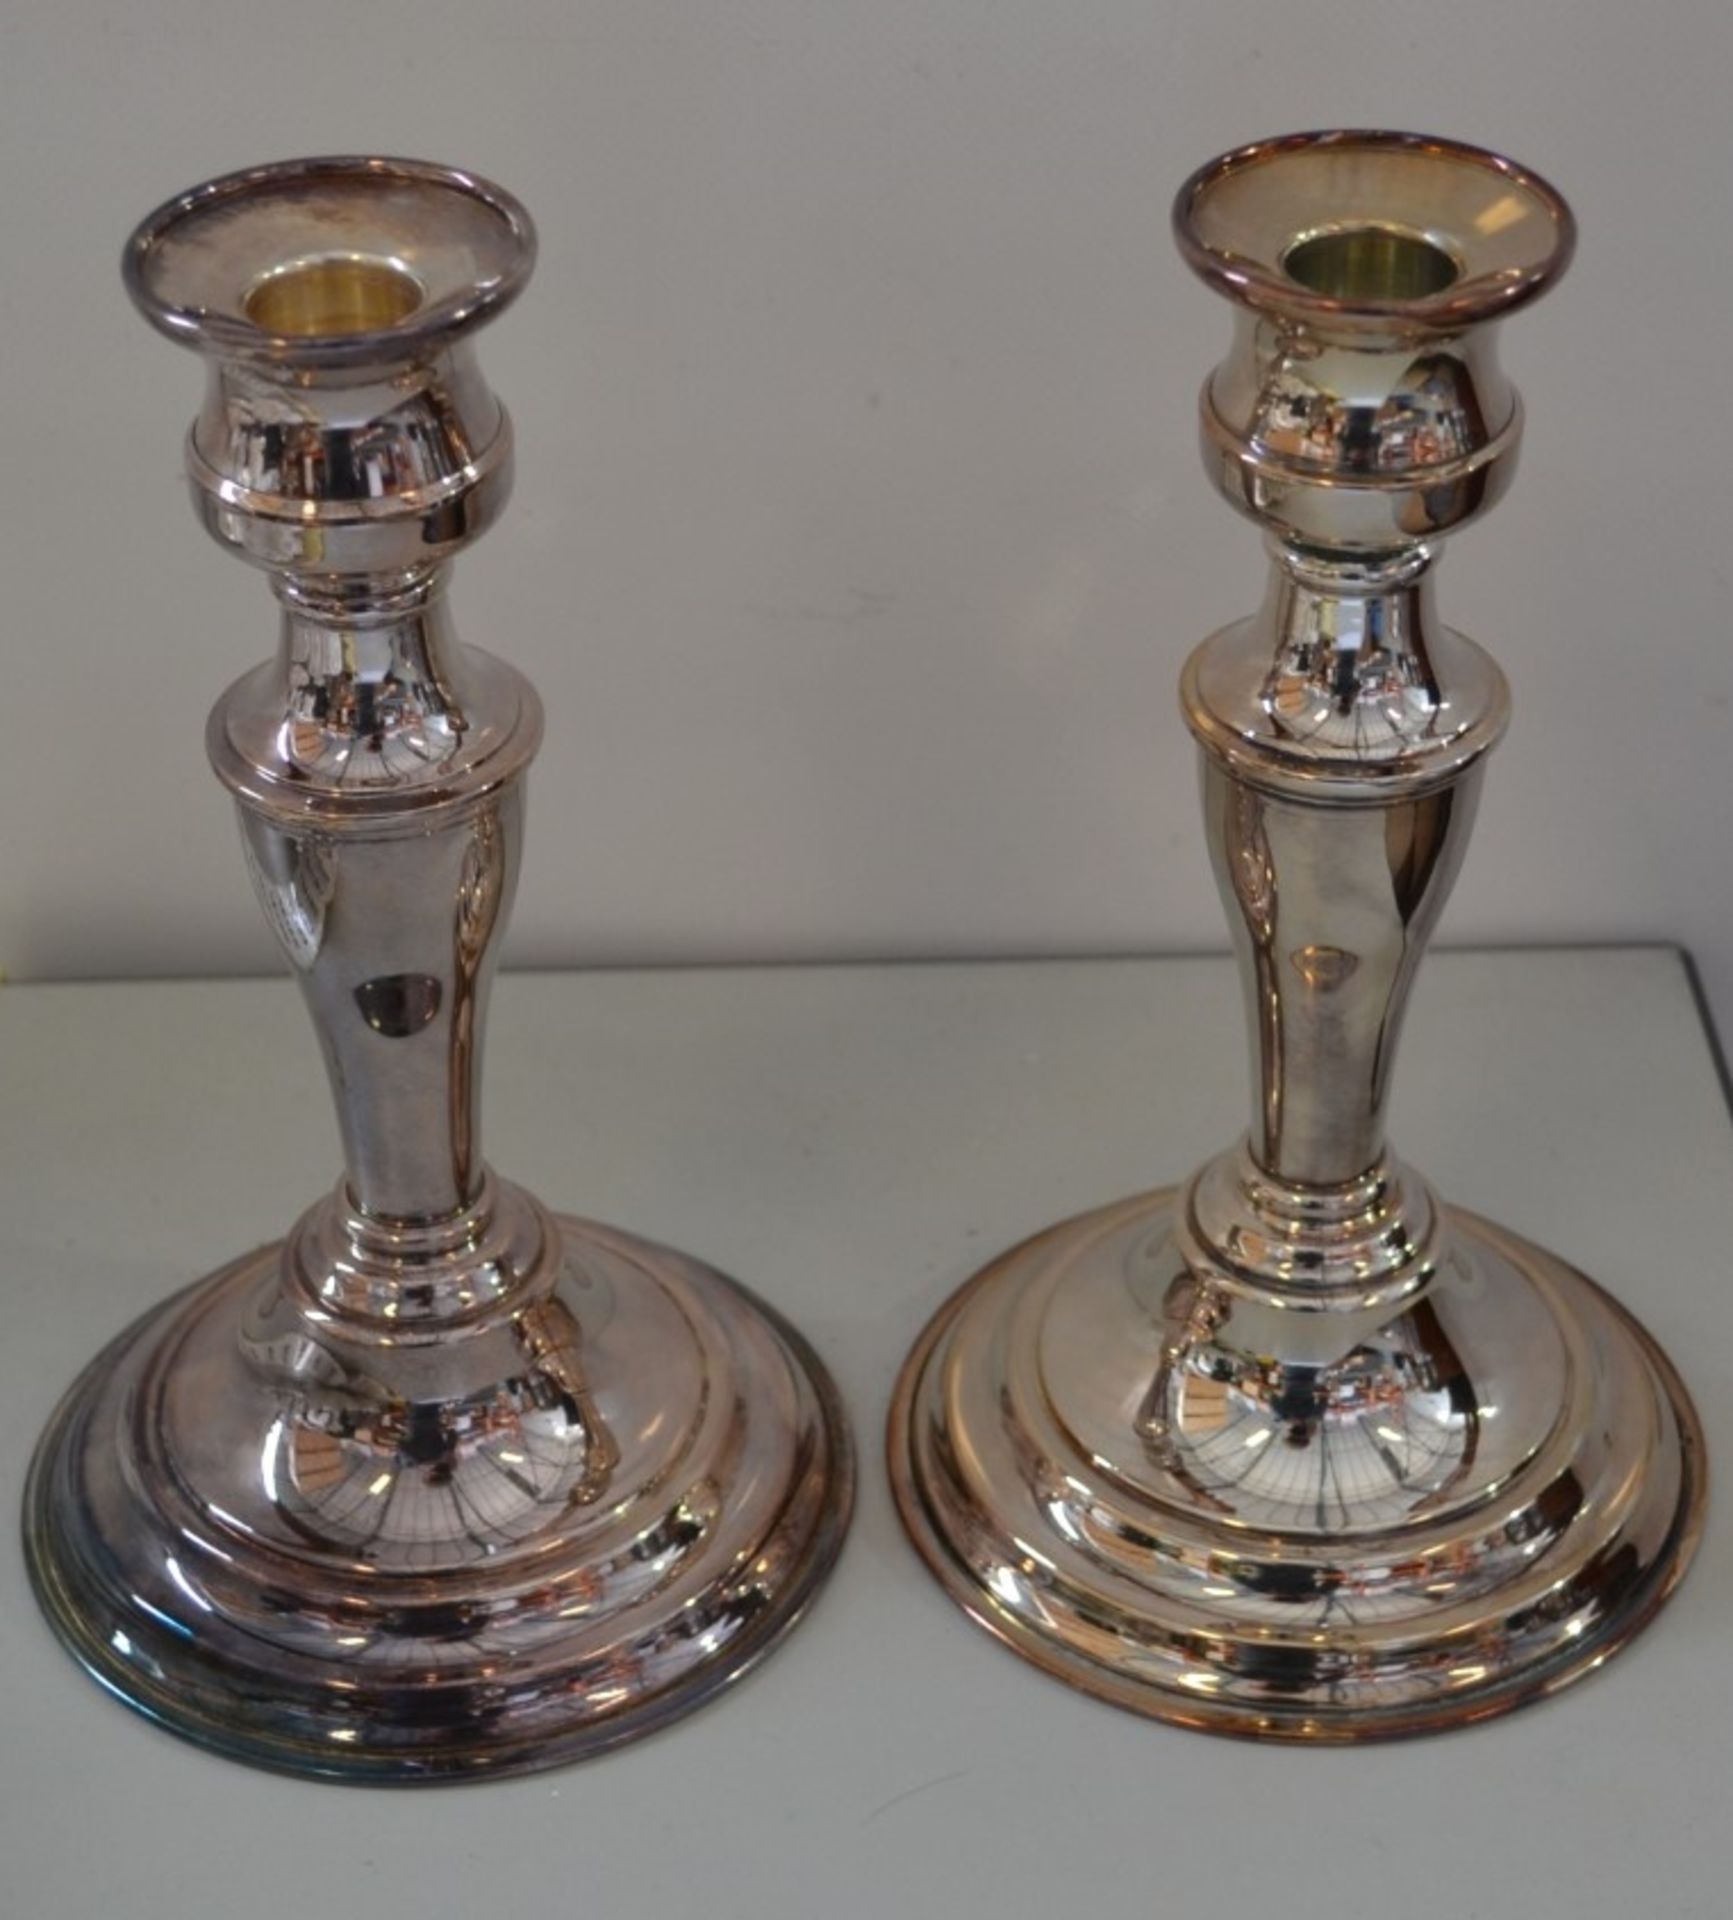 1 x Antique Silver Colour Candle Holders - Ref J2143 - CL314